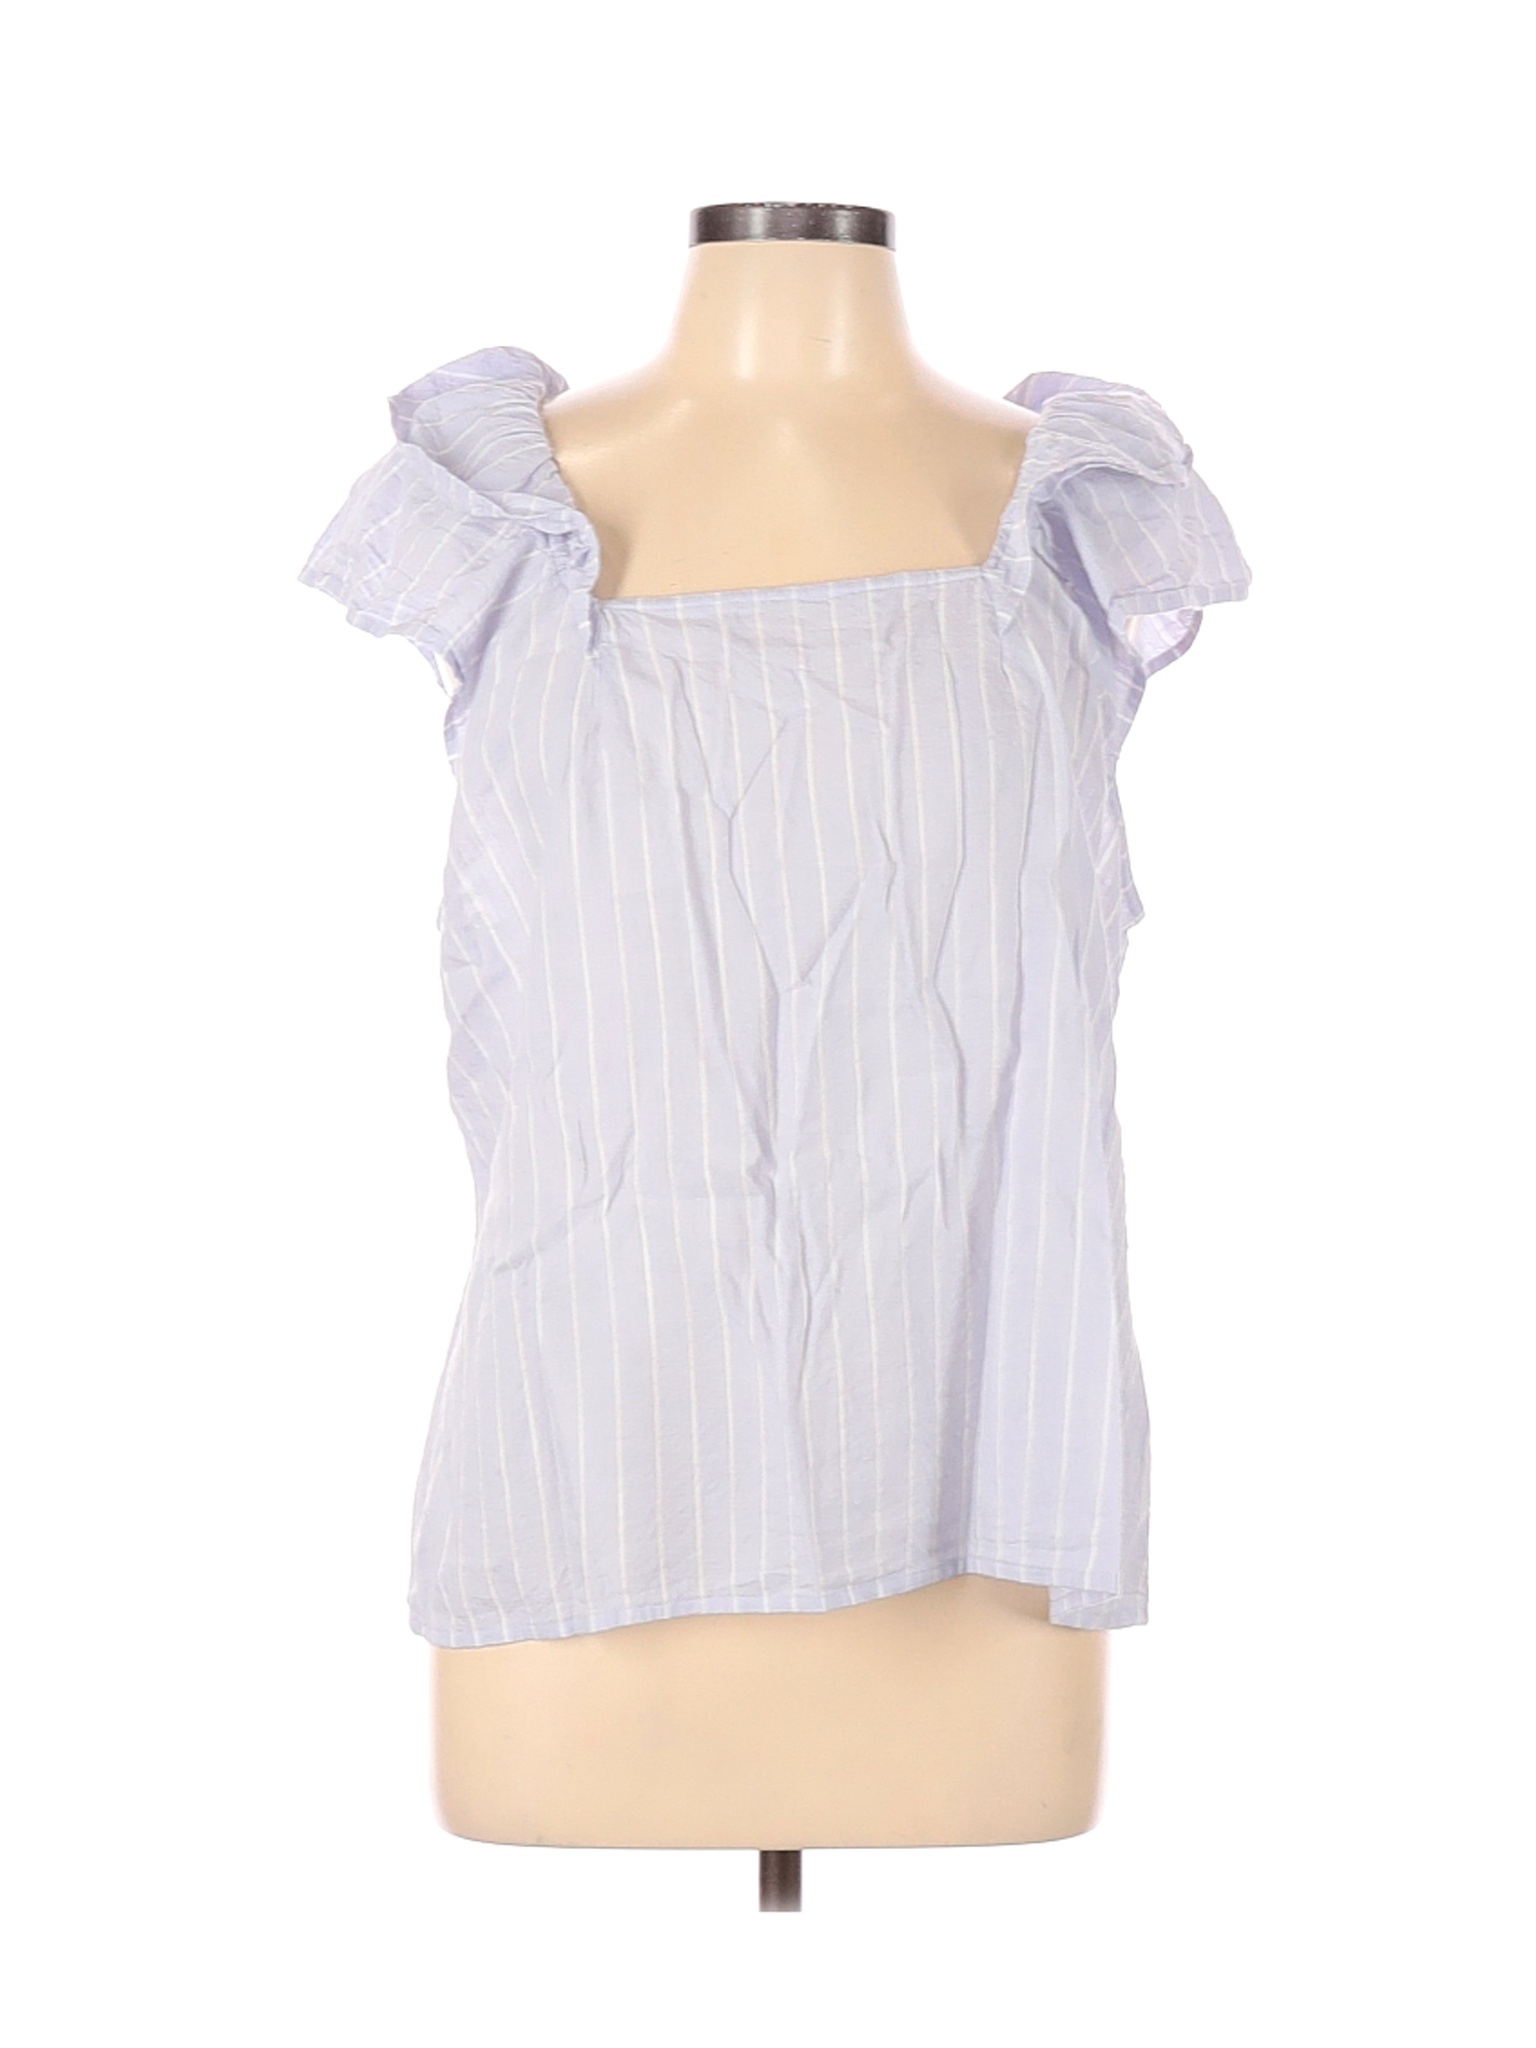 Old Navy Women White Short Sleeve Blouse XL Petites | eBay